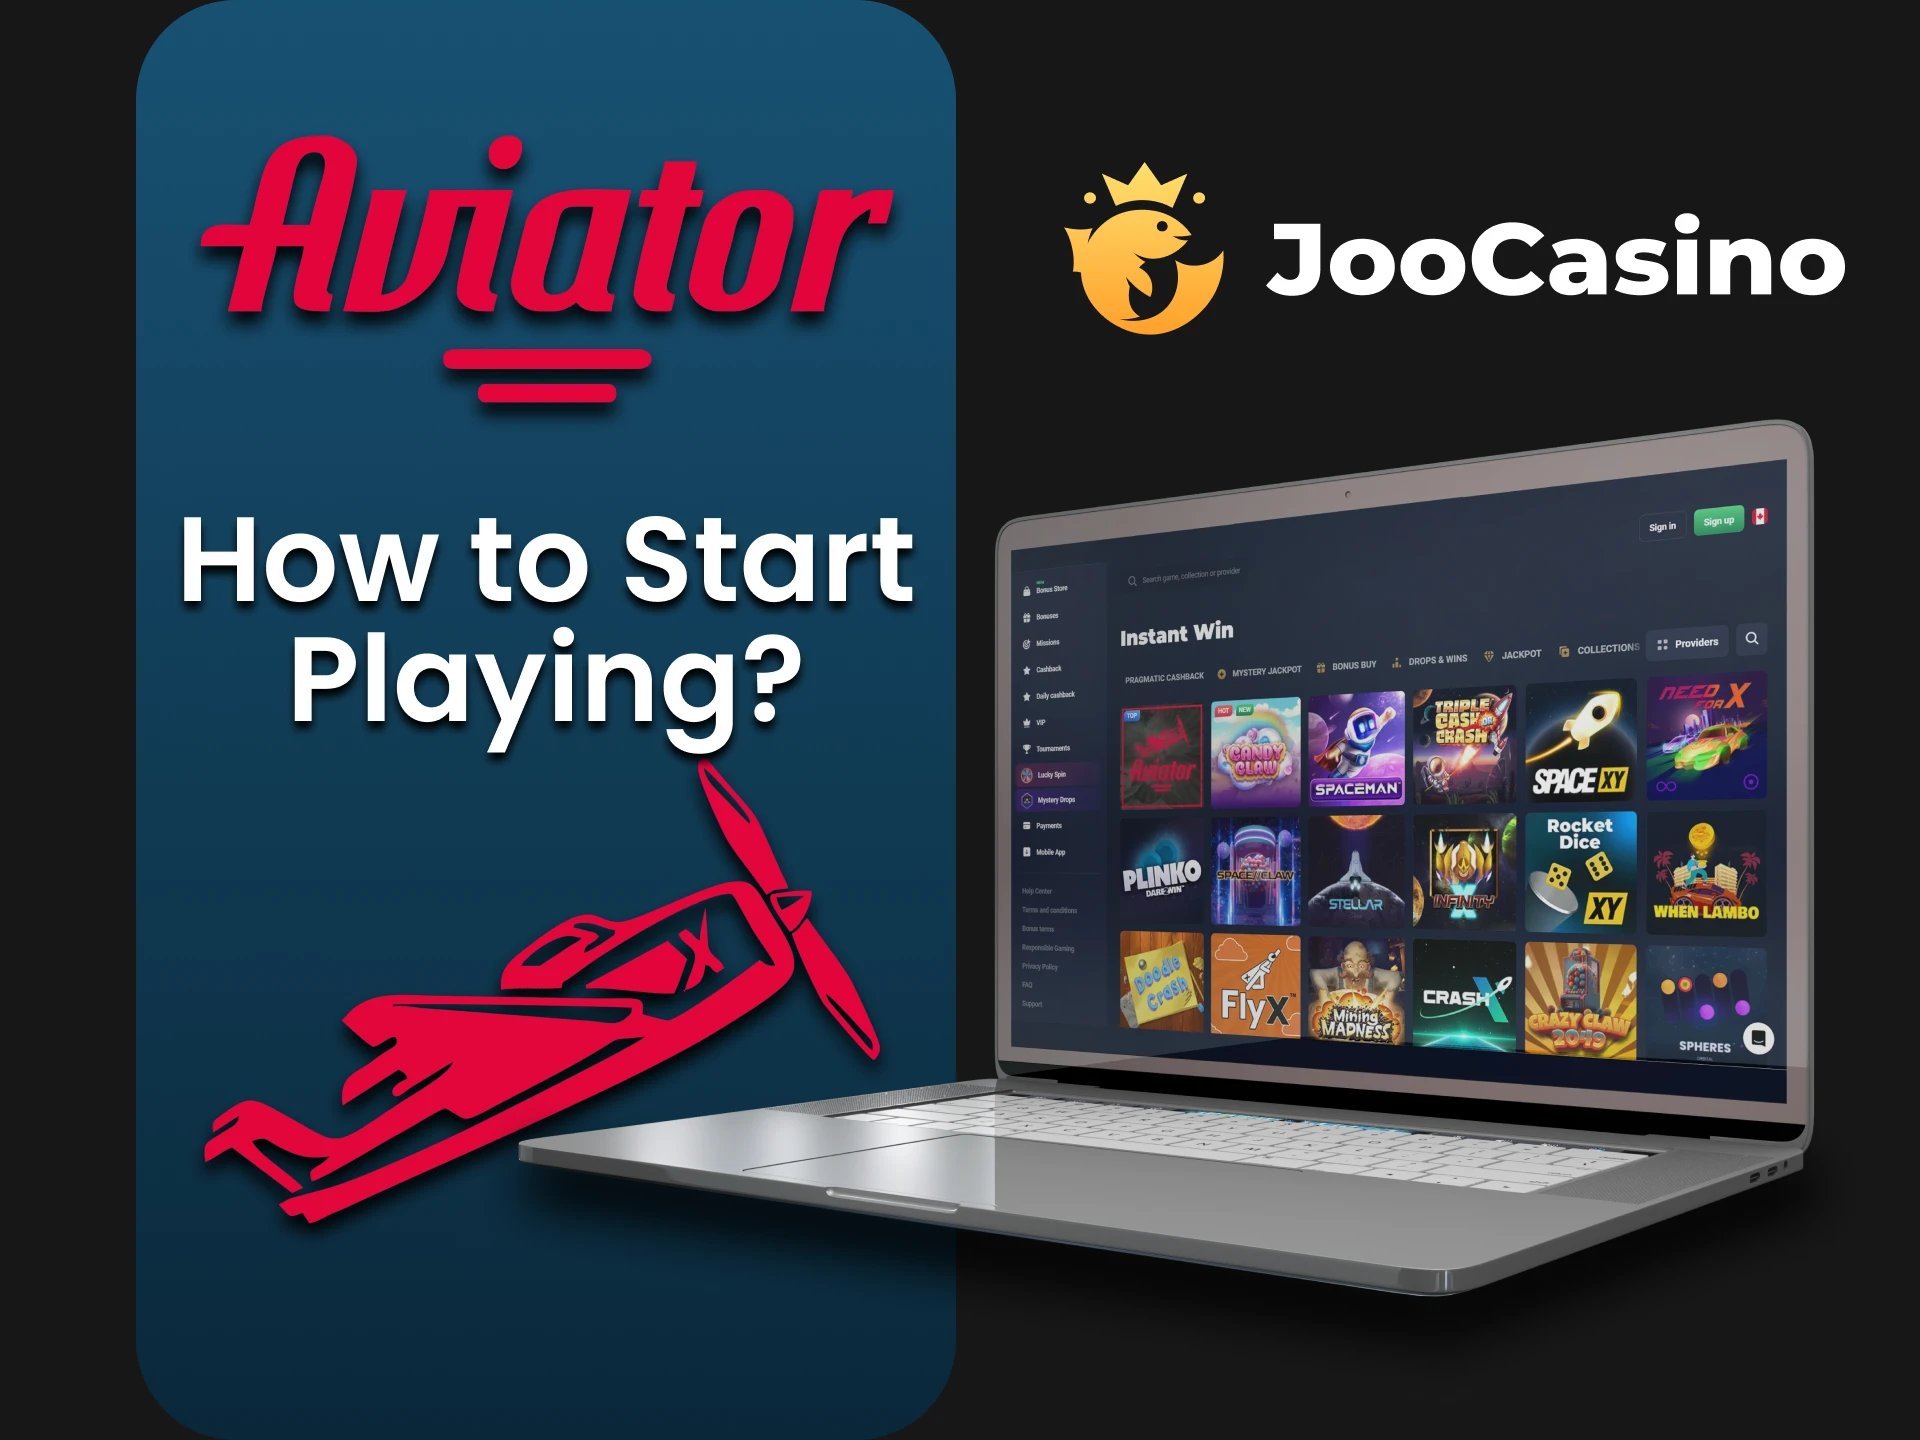 Head over to Joo Casino to play Aviator.